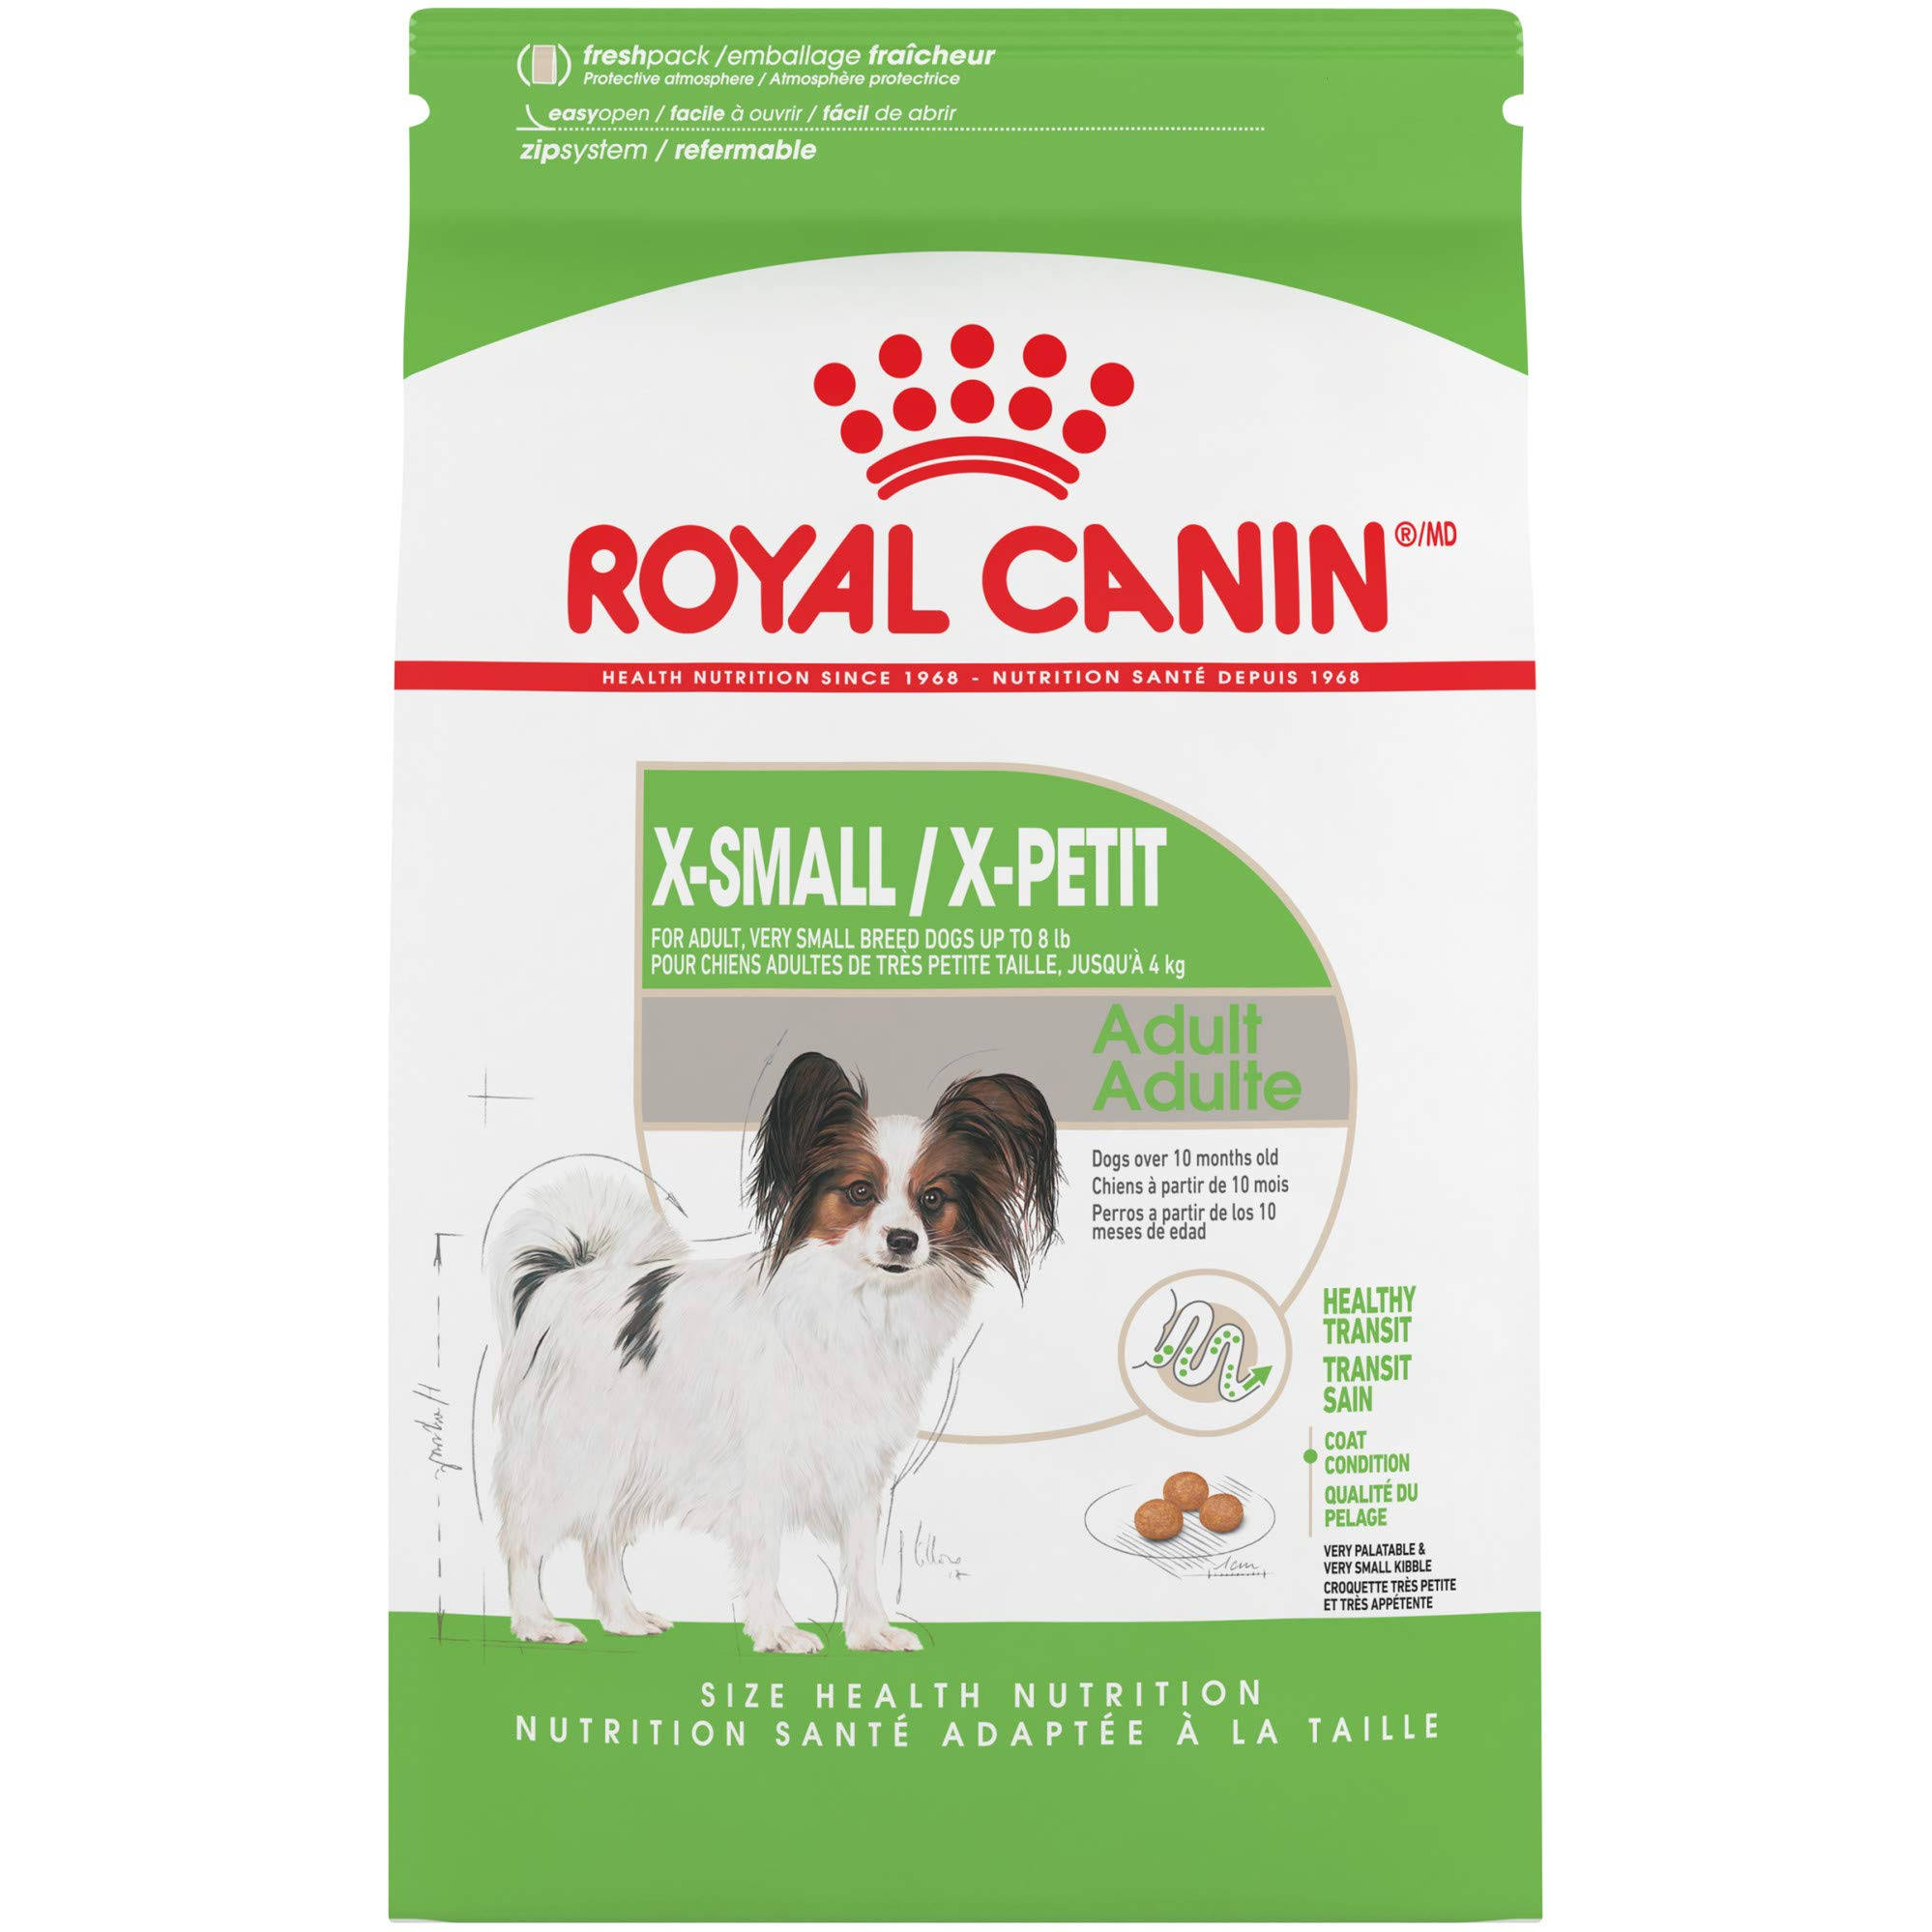 Royal Canin Adult Dog Food - X-Small, 2.5lbs